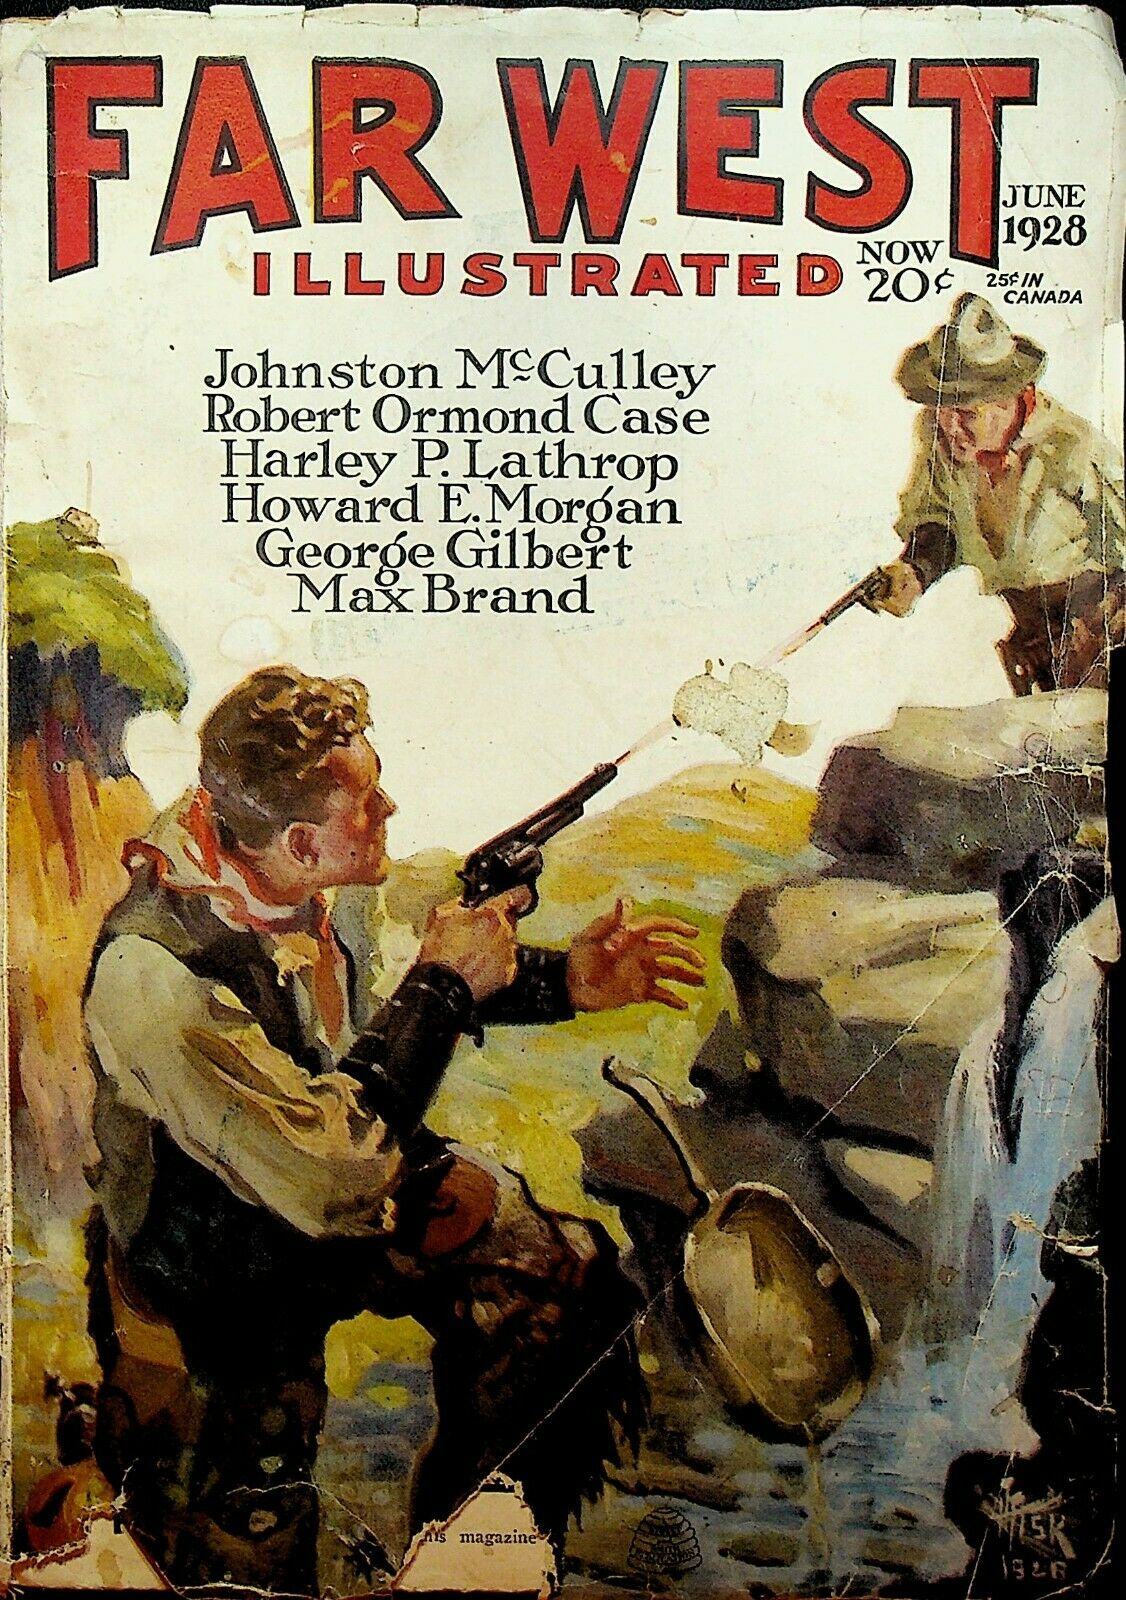 Far West Illustrated - June 1928